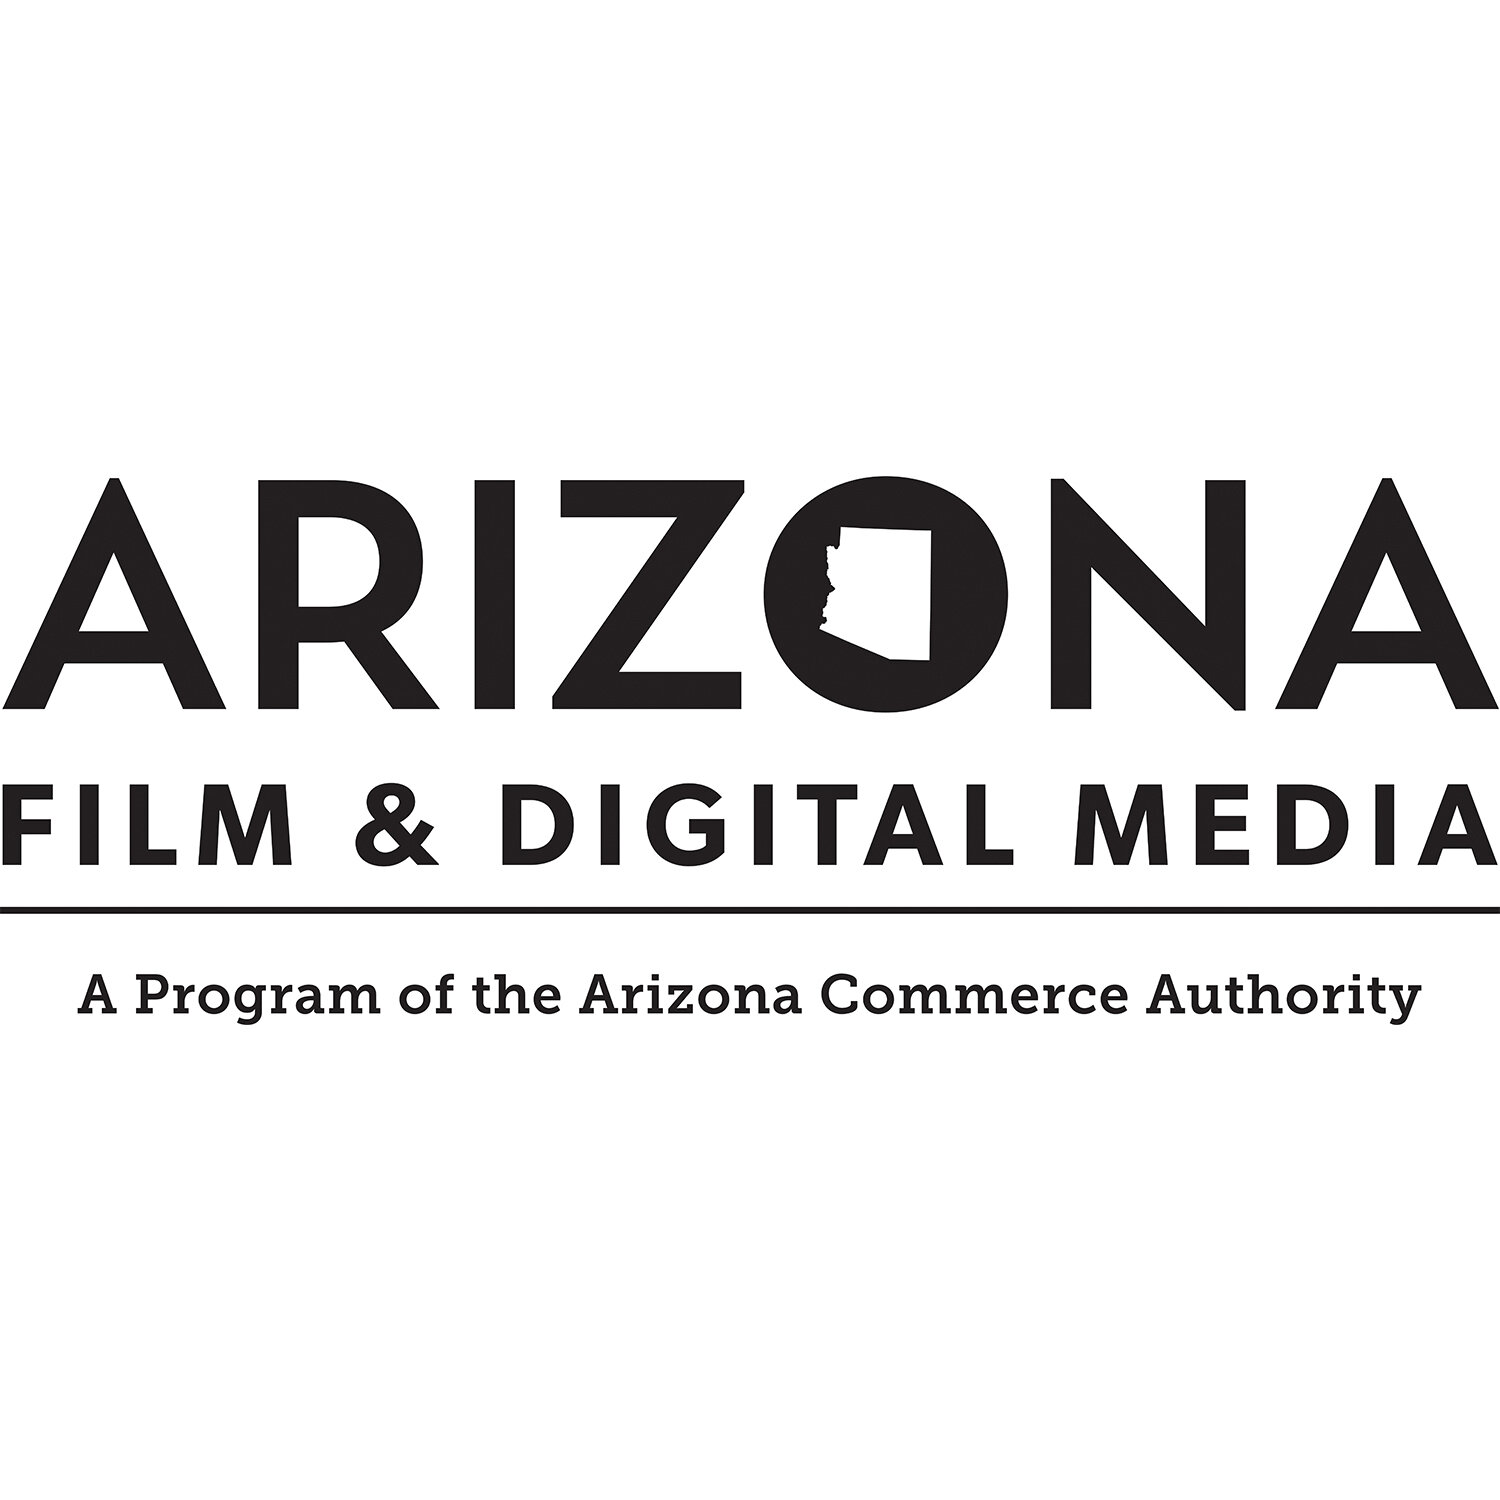 Arizona Film and Digital Media